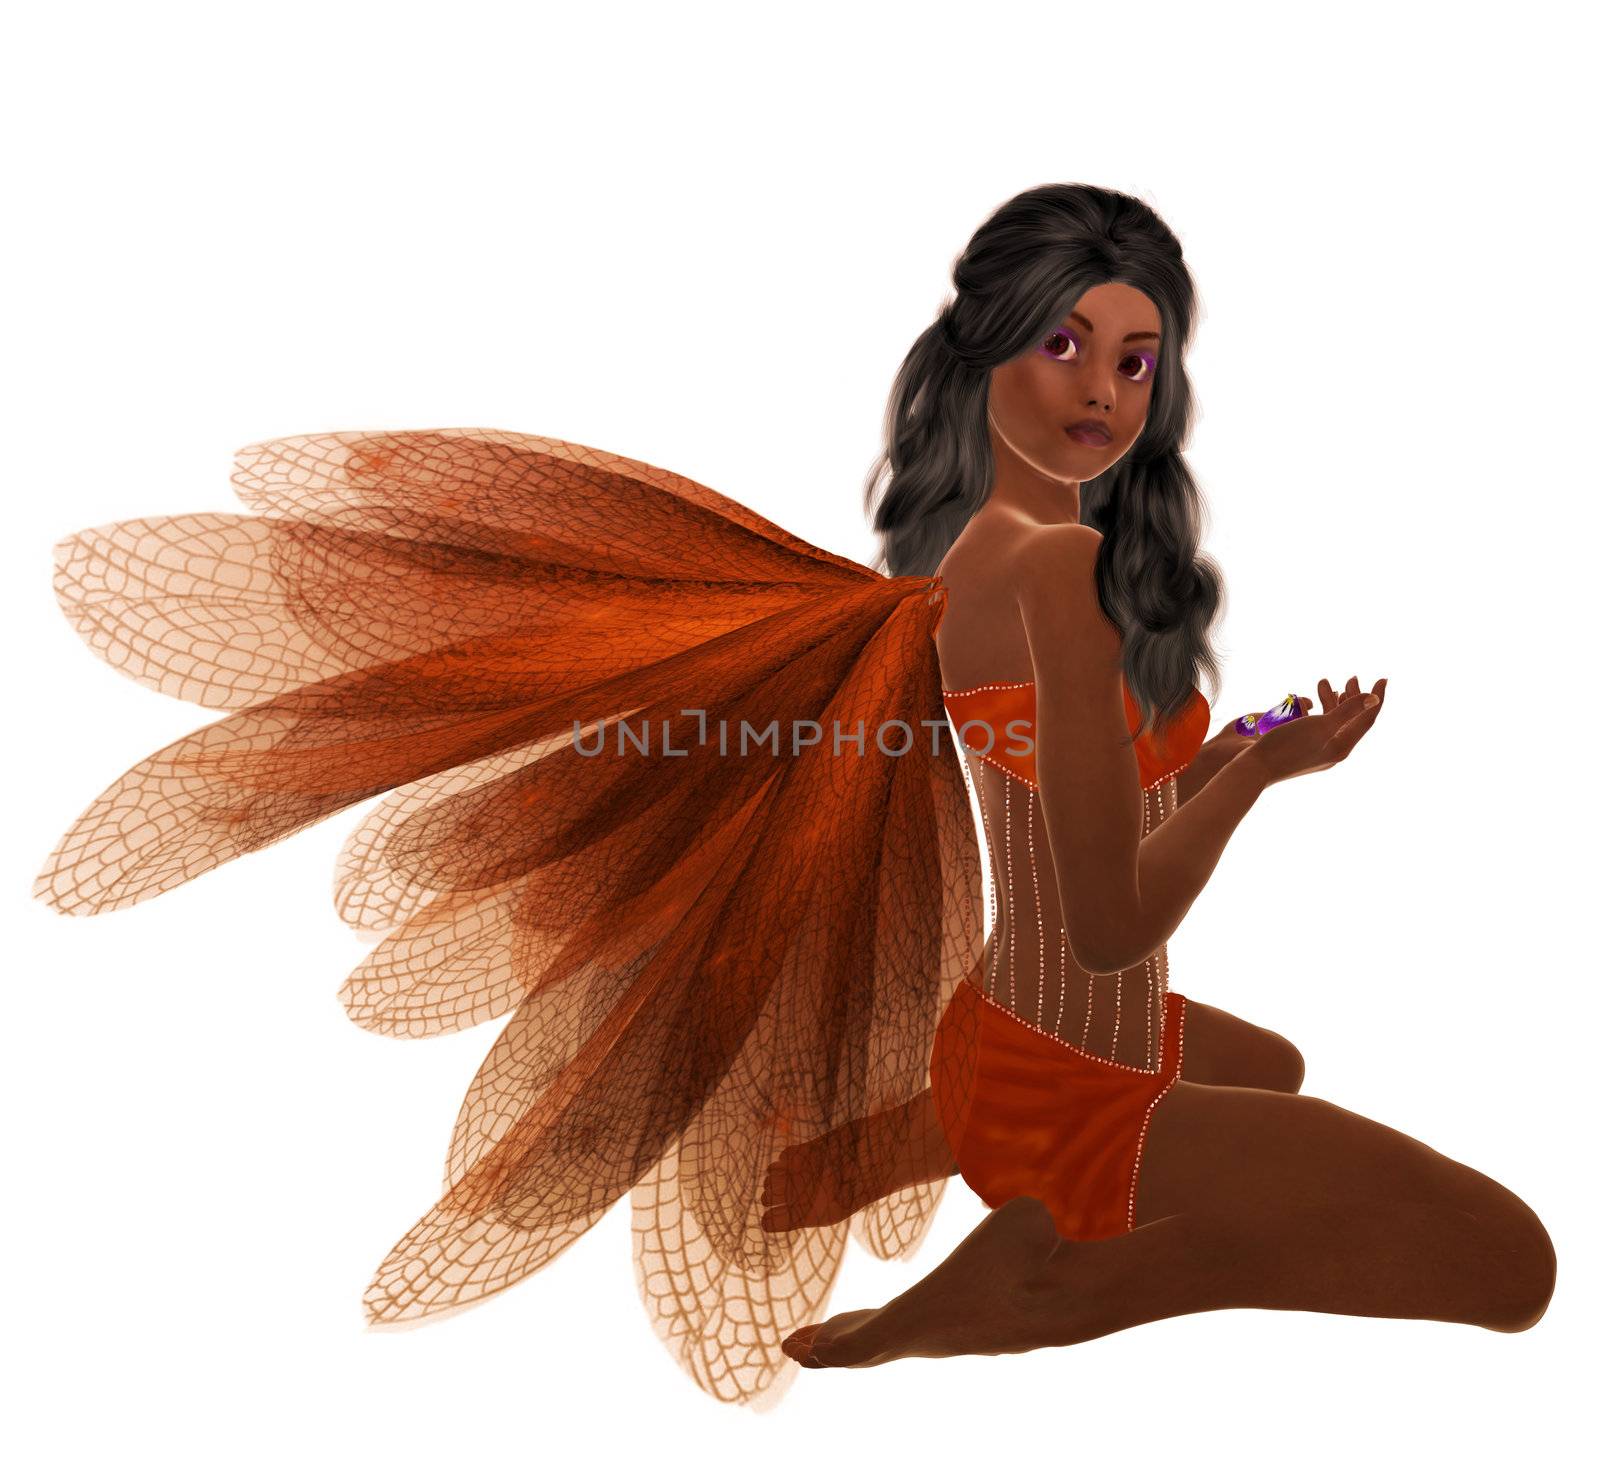 Orange fairy with dark hair, sitting holding flowers in her hand